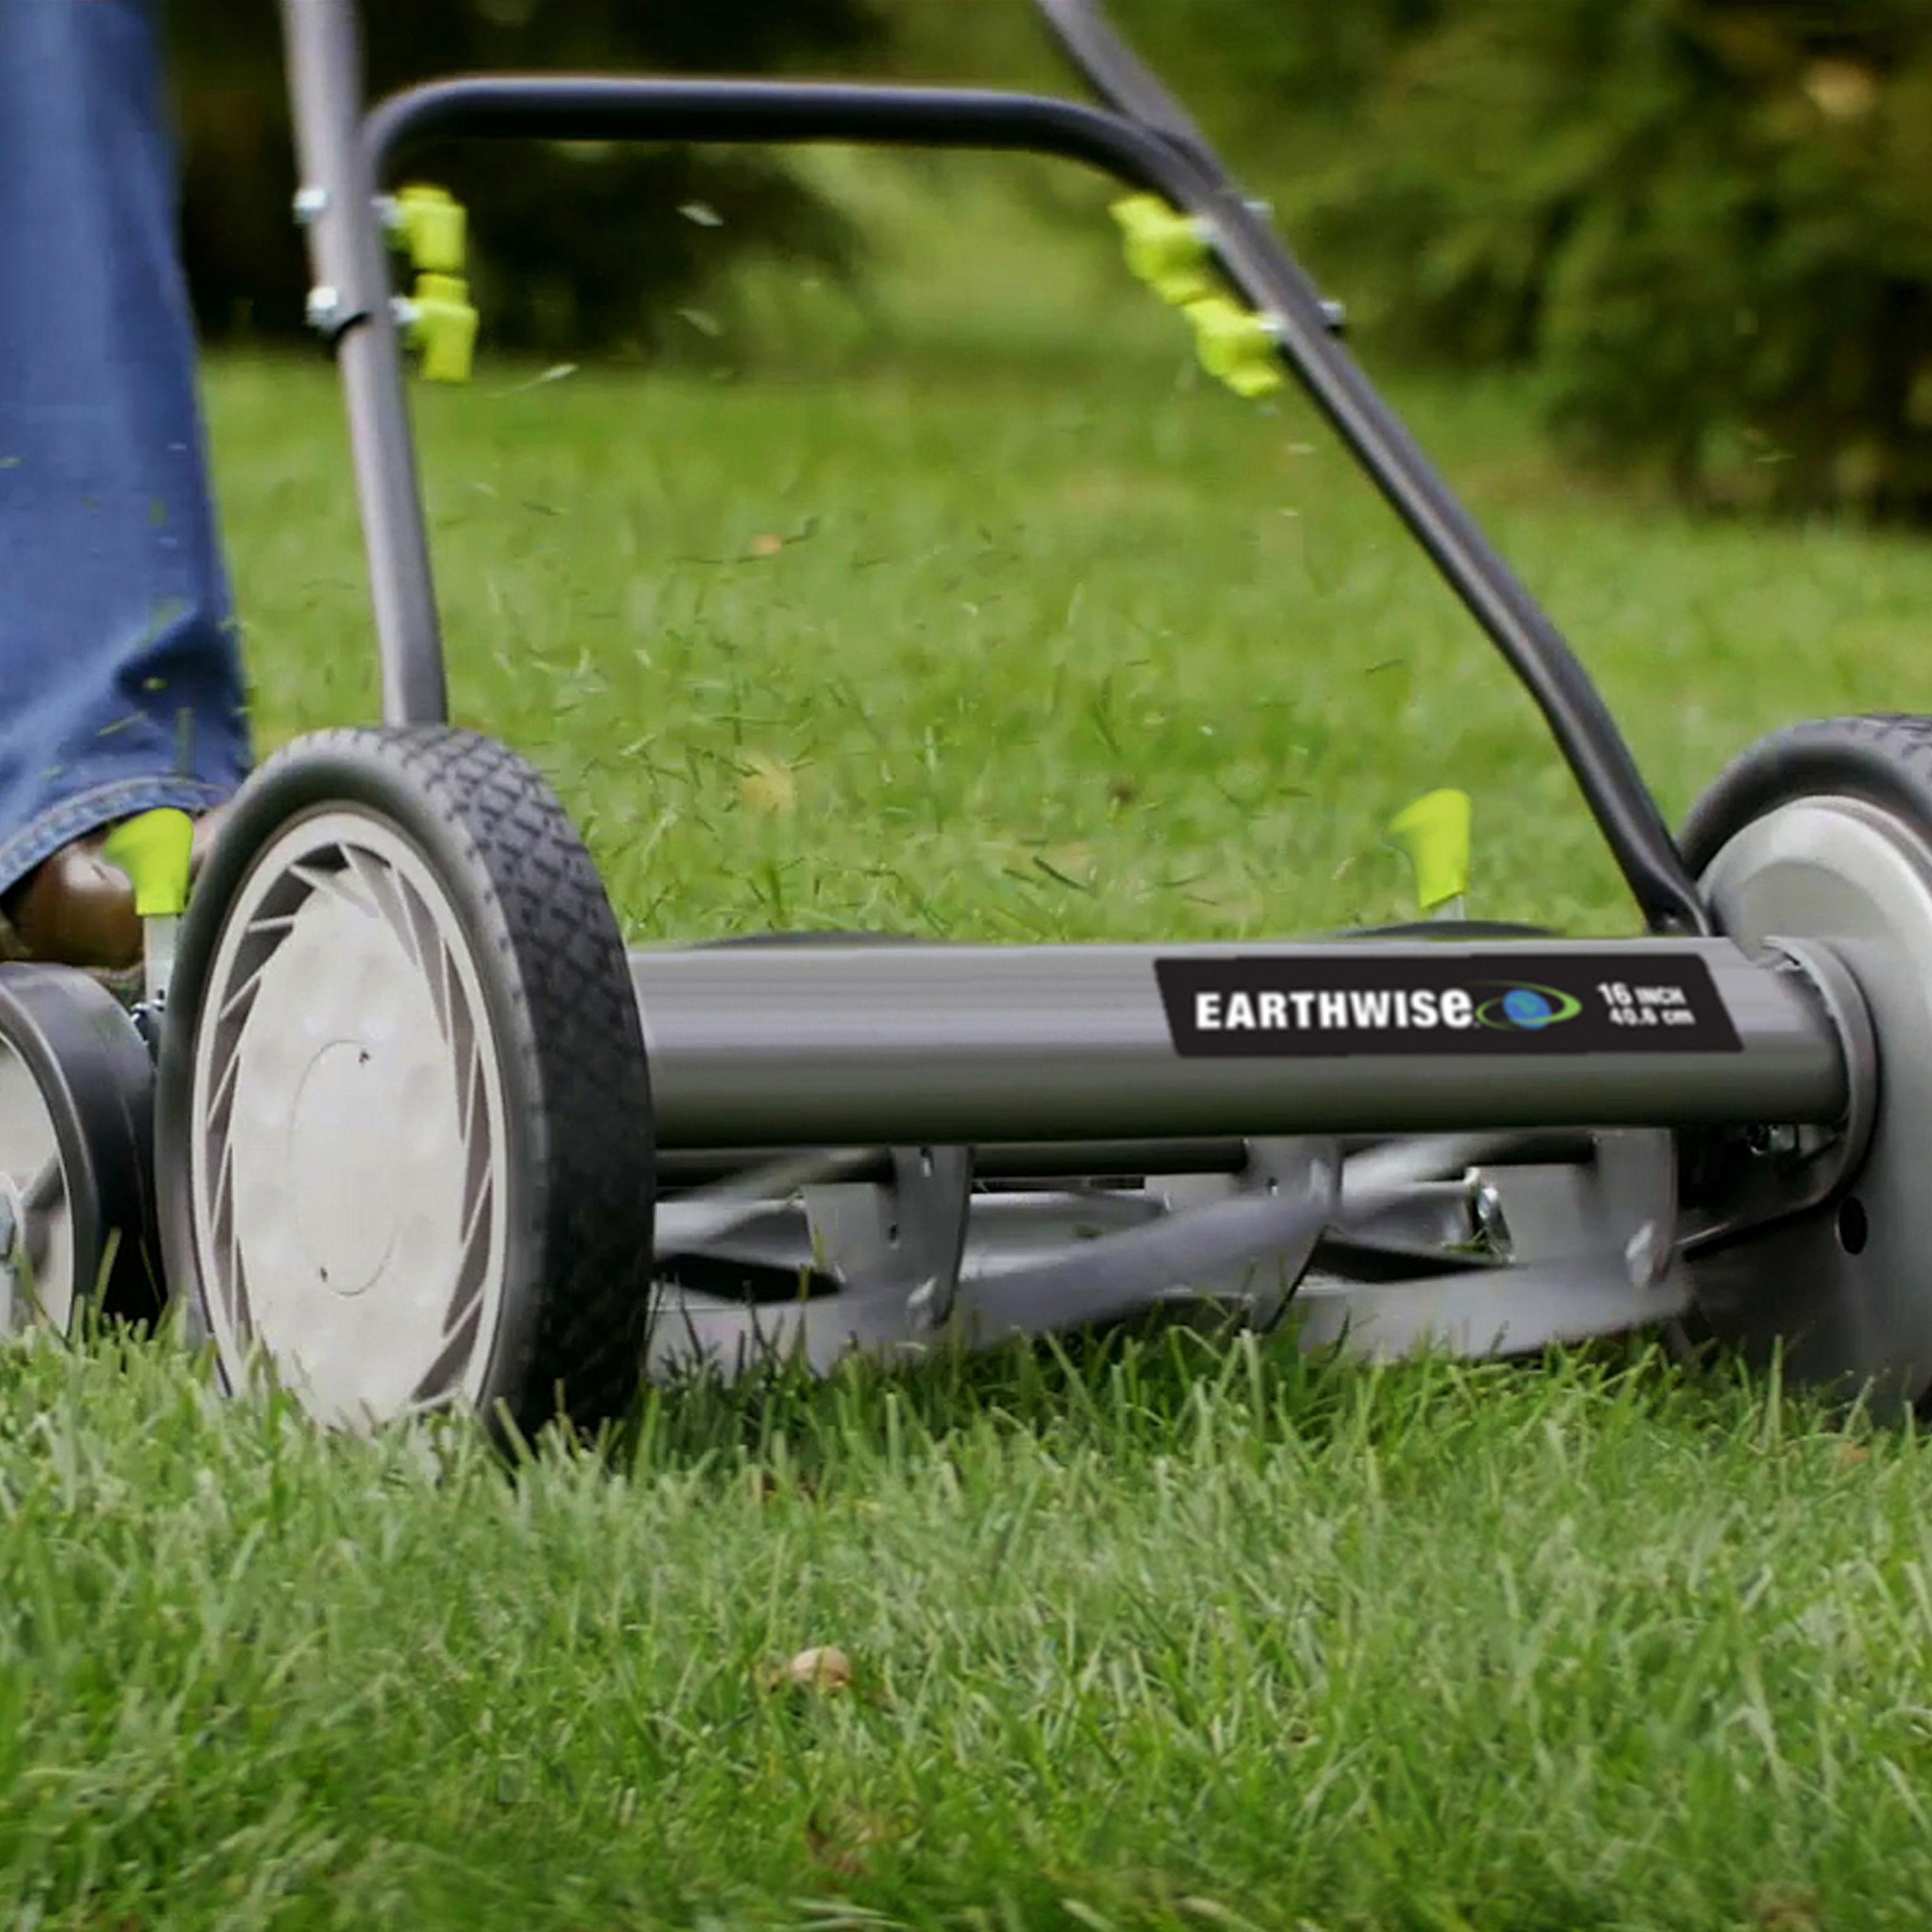 Earthwise Lawn Mower (16) 7-Blade Push Reel Lawn Mower